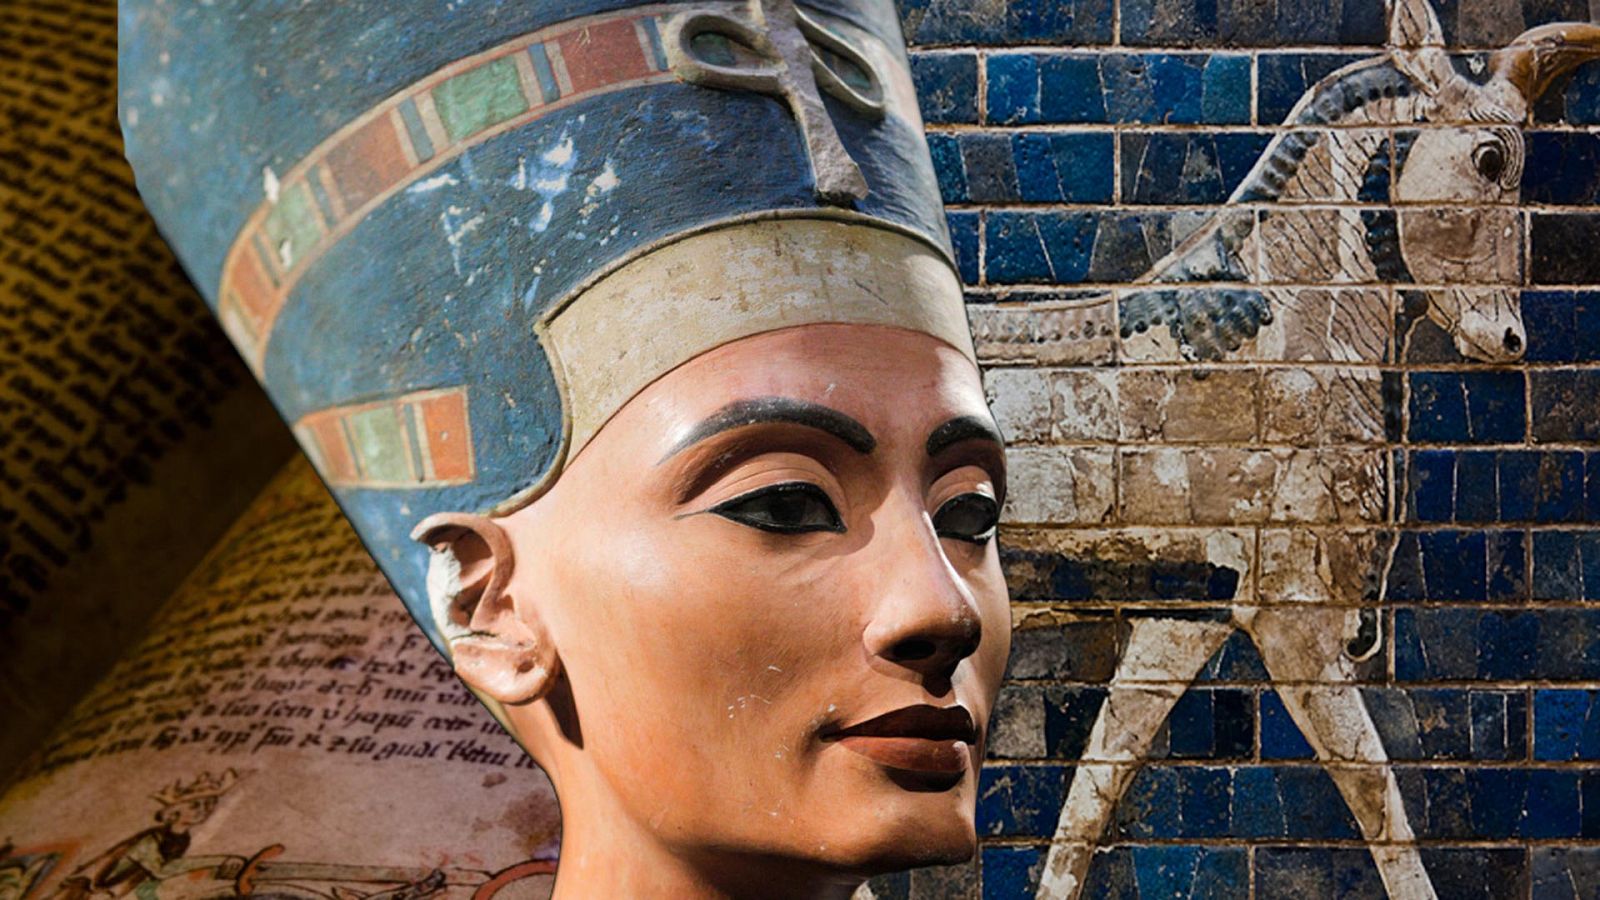 Nefertiti, la reina solitaria - Episodio 1: Historias sobre el expolio del arte antiguo - Documental en RTVE